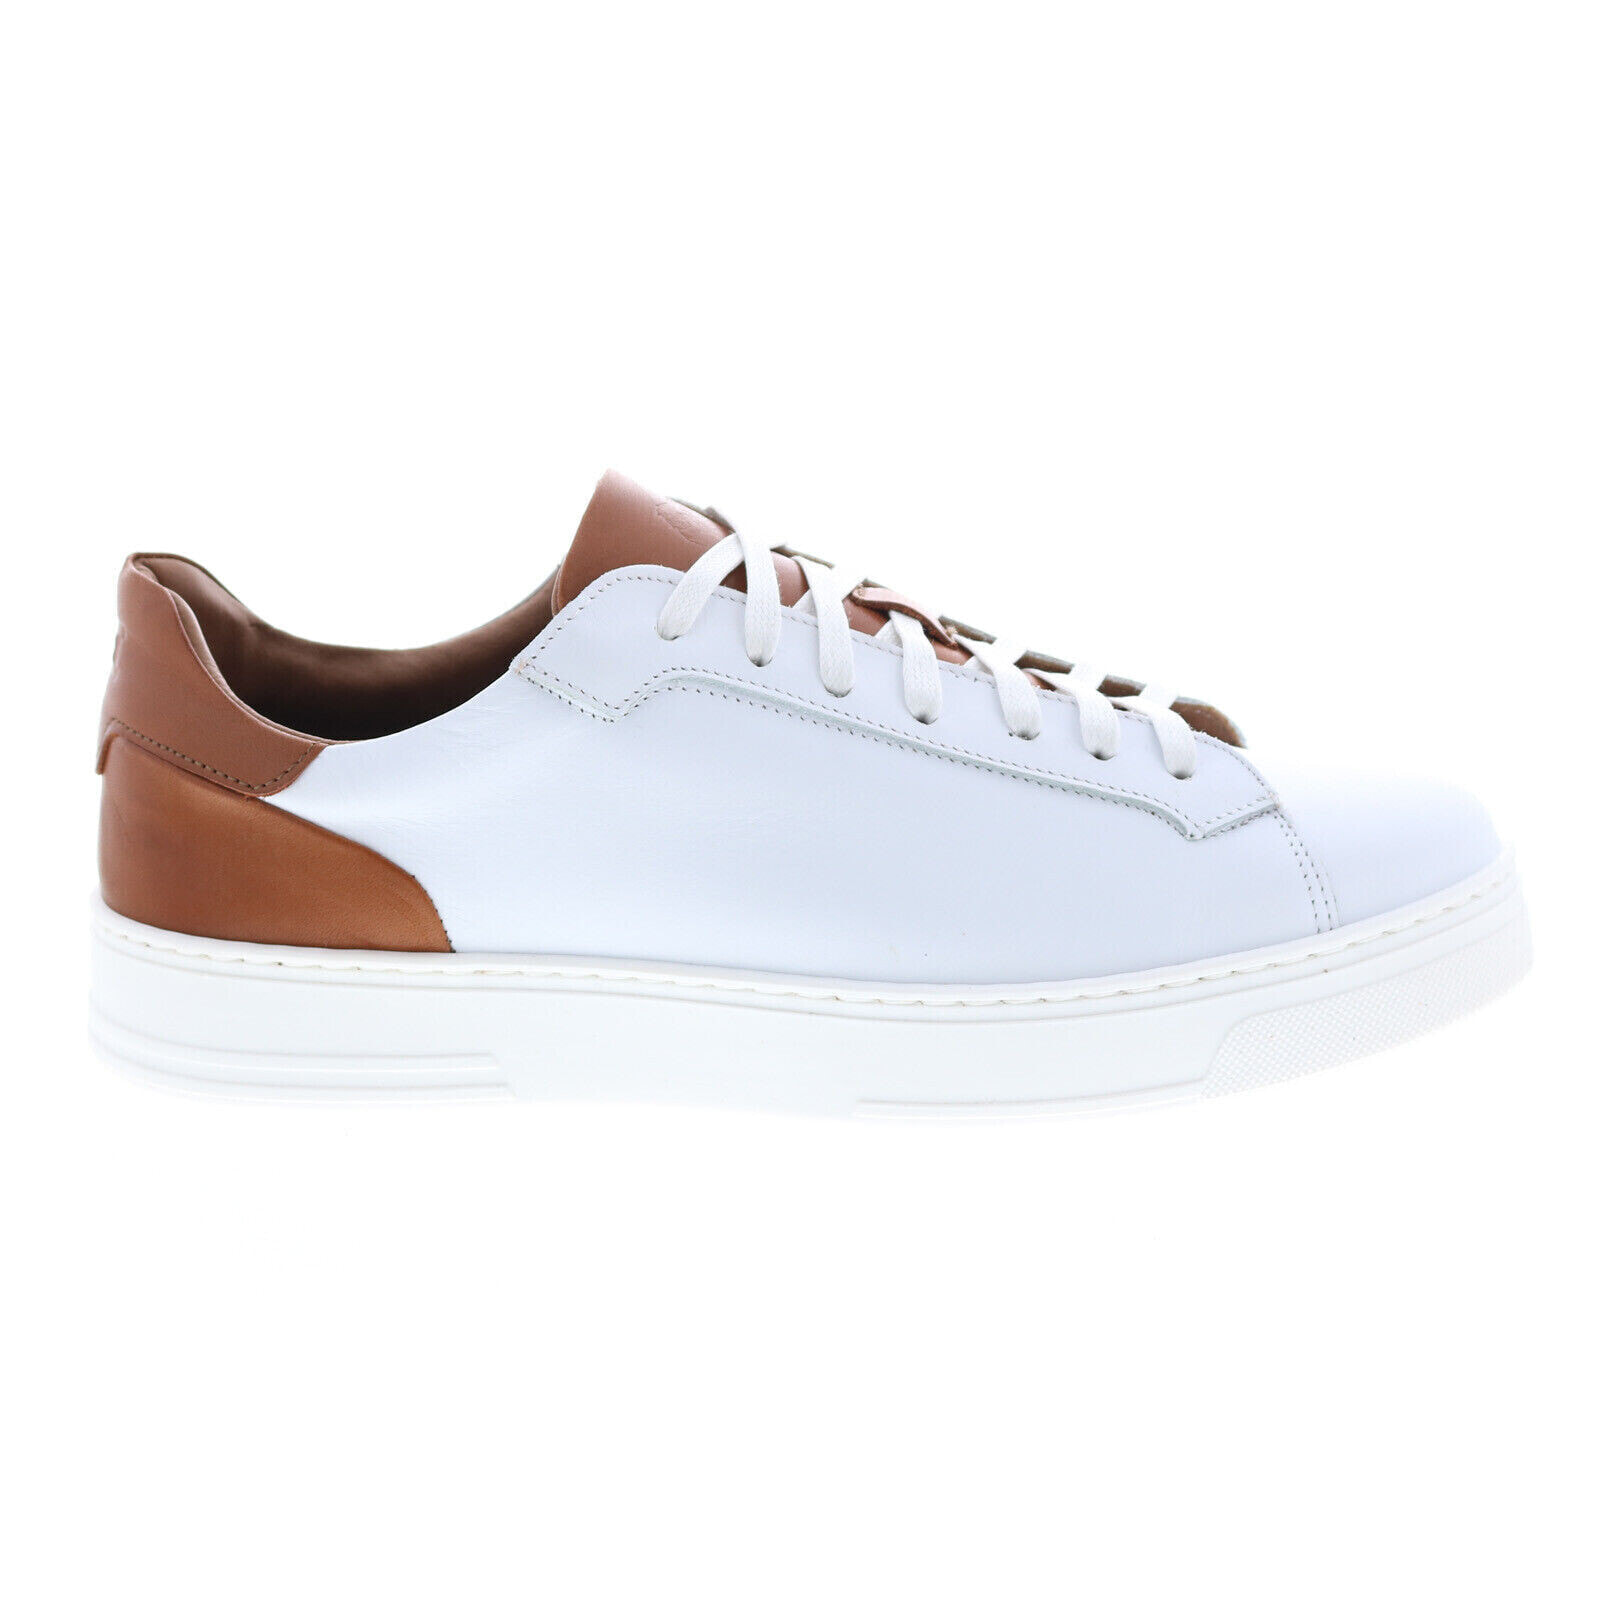 Bruno Magli Raffaele BM1RFLG0P Mens White Leather Lifestyle Sneakers Shoes 7.5